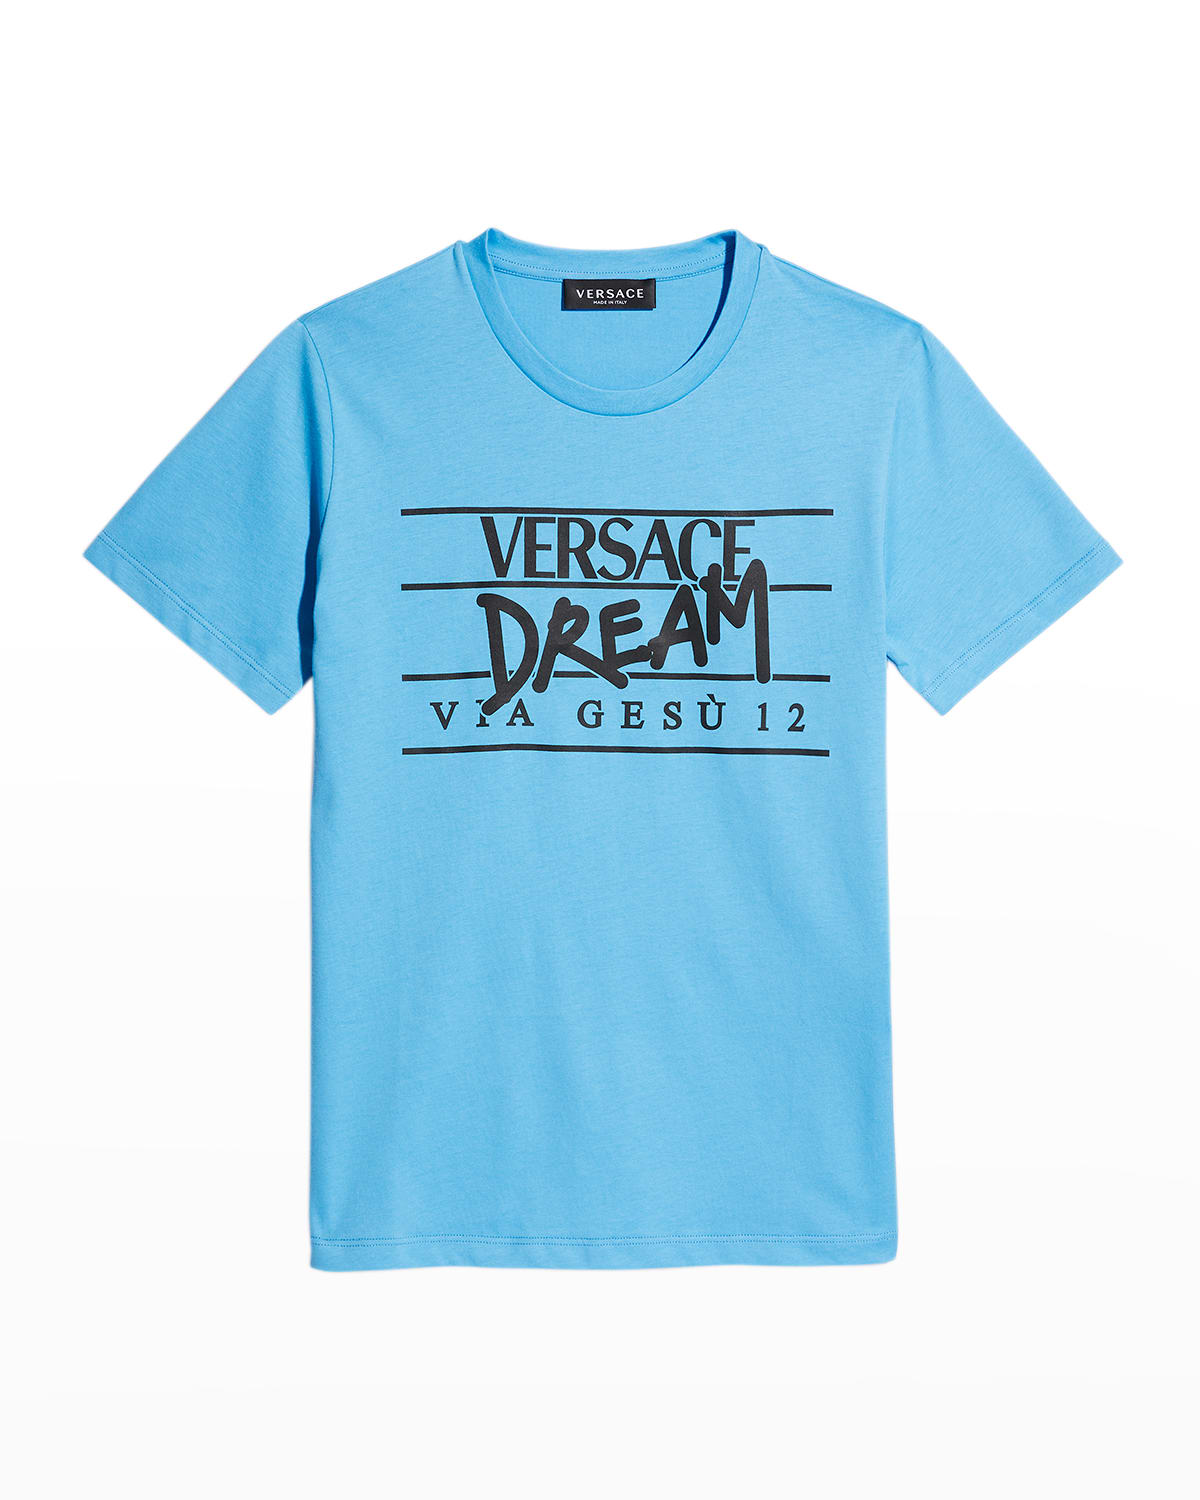 Kid's Versace Dream T-Shirt, Size 8-14